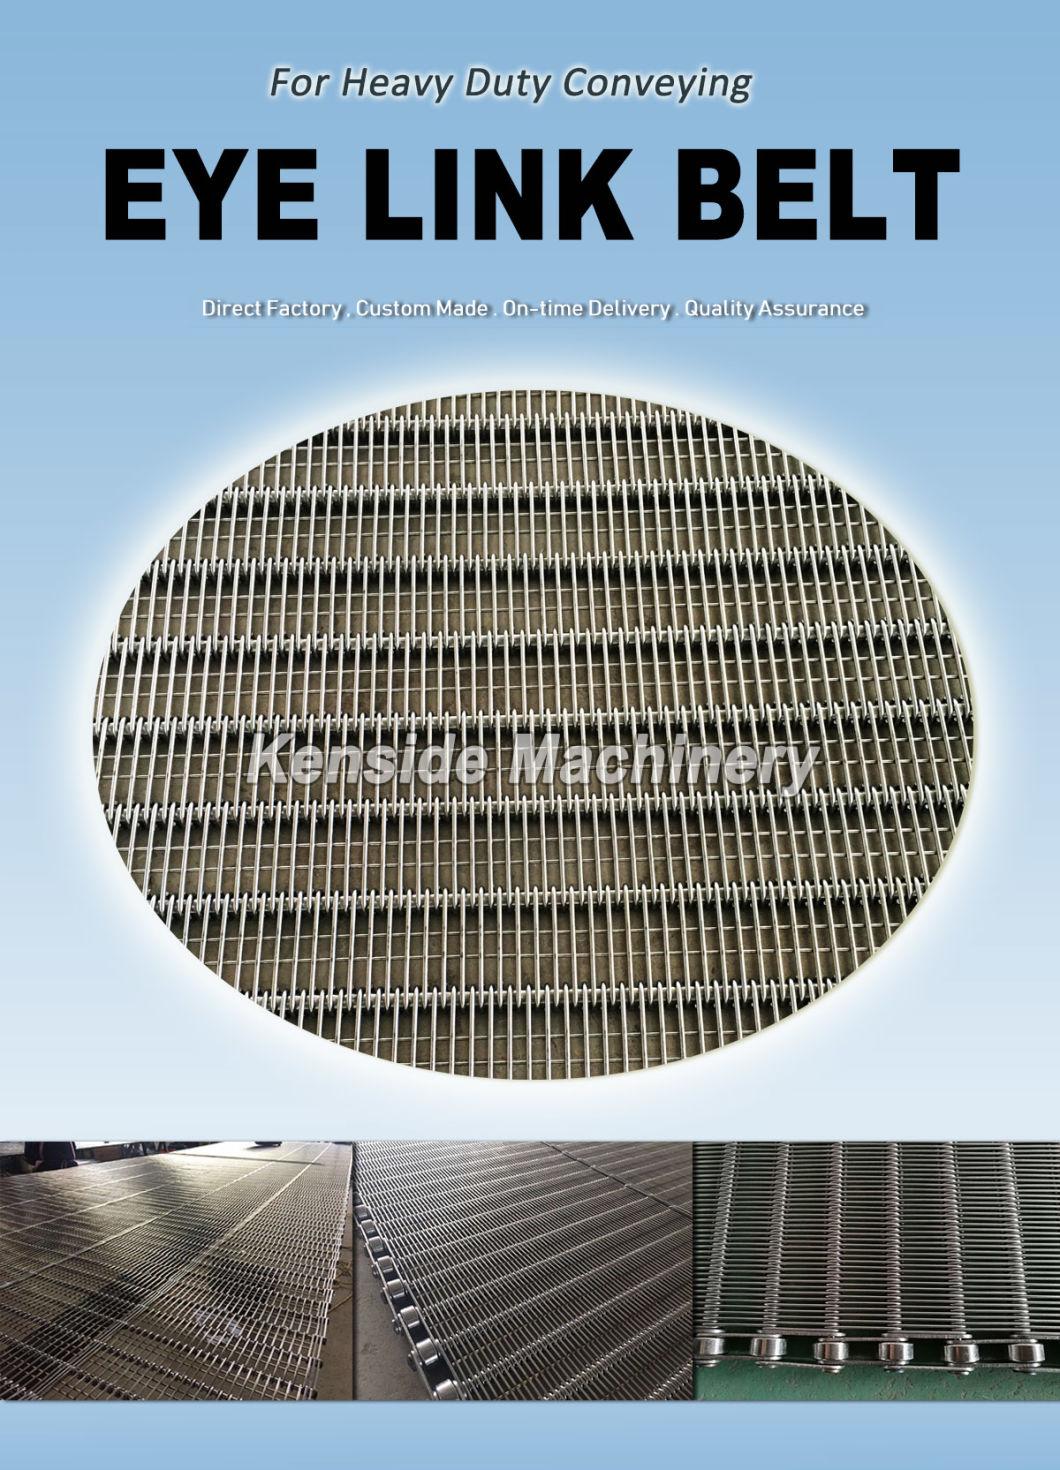 Manufacturer Stainless Steel 304 Eye Link Belt for Food Cooling Processing